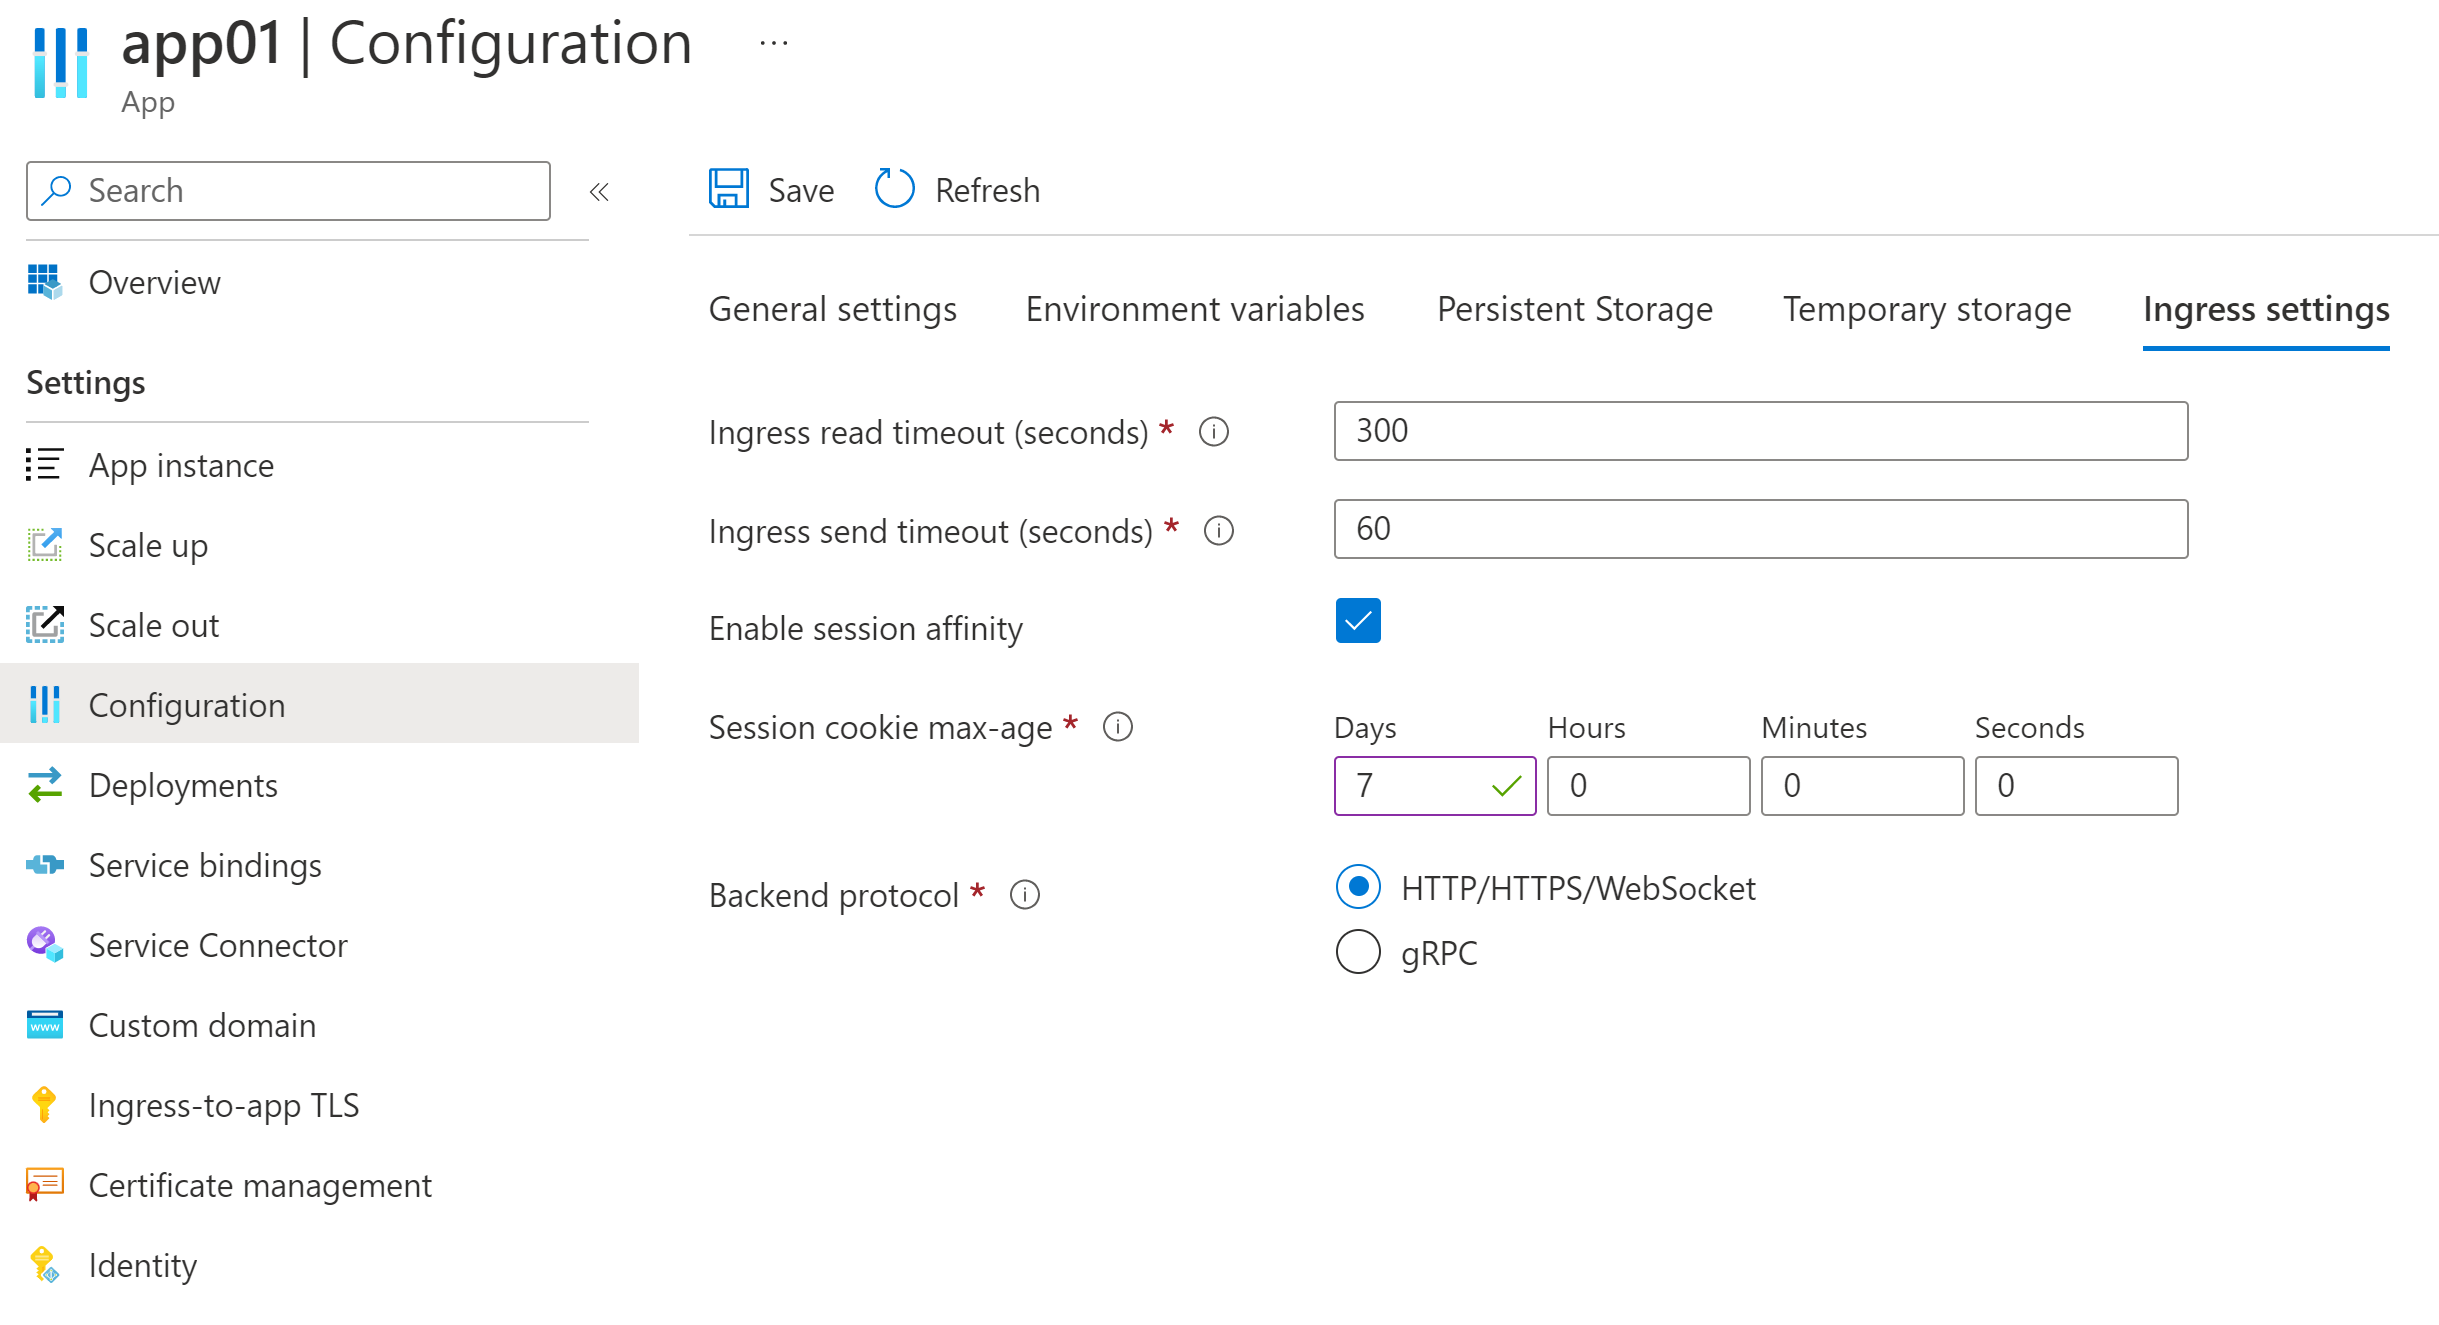 Screenshot of Azure portal Configuration page showing the Ingress settings tab.